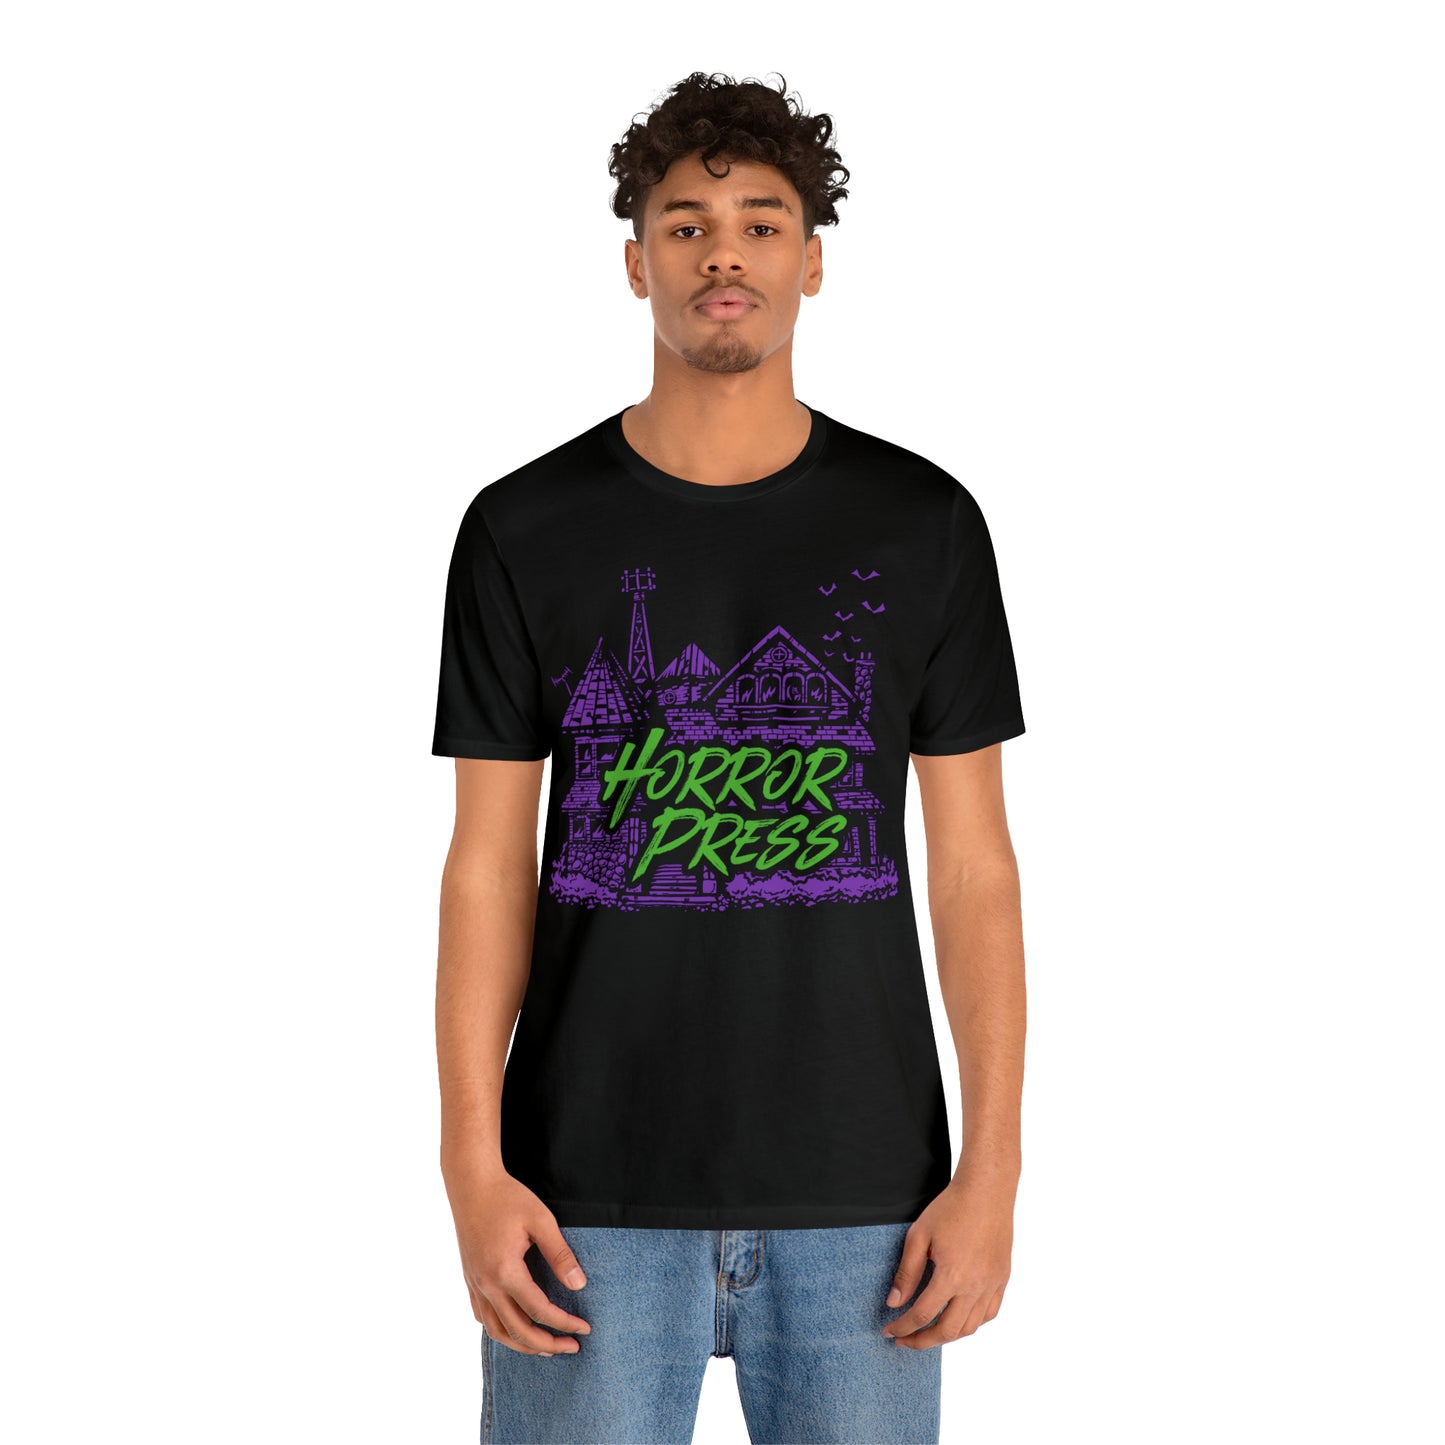 Horror Press Official T-Shirt - Horror Press Unisex Tee - Horror Movie Fan Gift  - Horror Press Horror Fan Shirt - Scary Movie Fan Shirt - Horror Game Fan Tee - Purple on Black T-Shirt